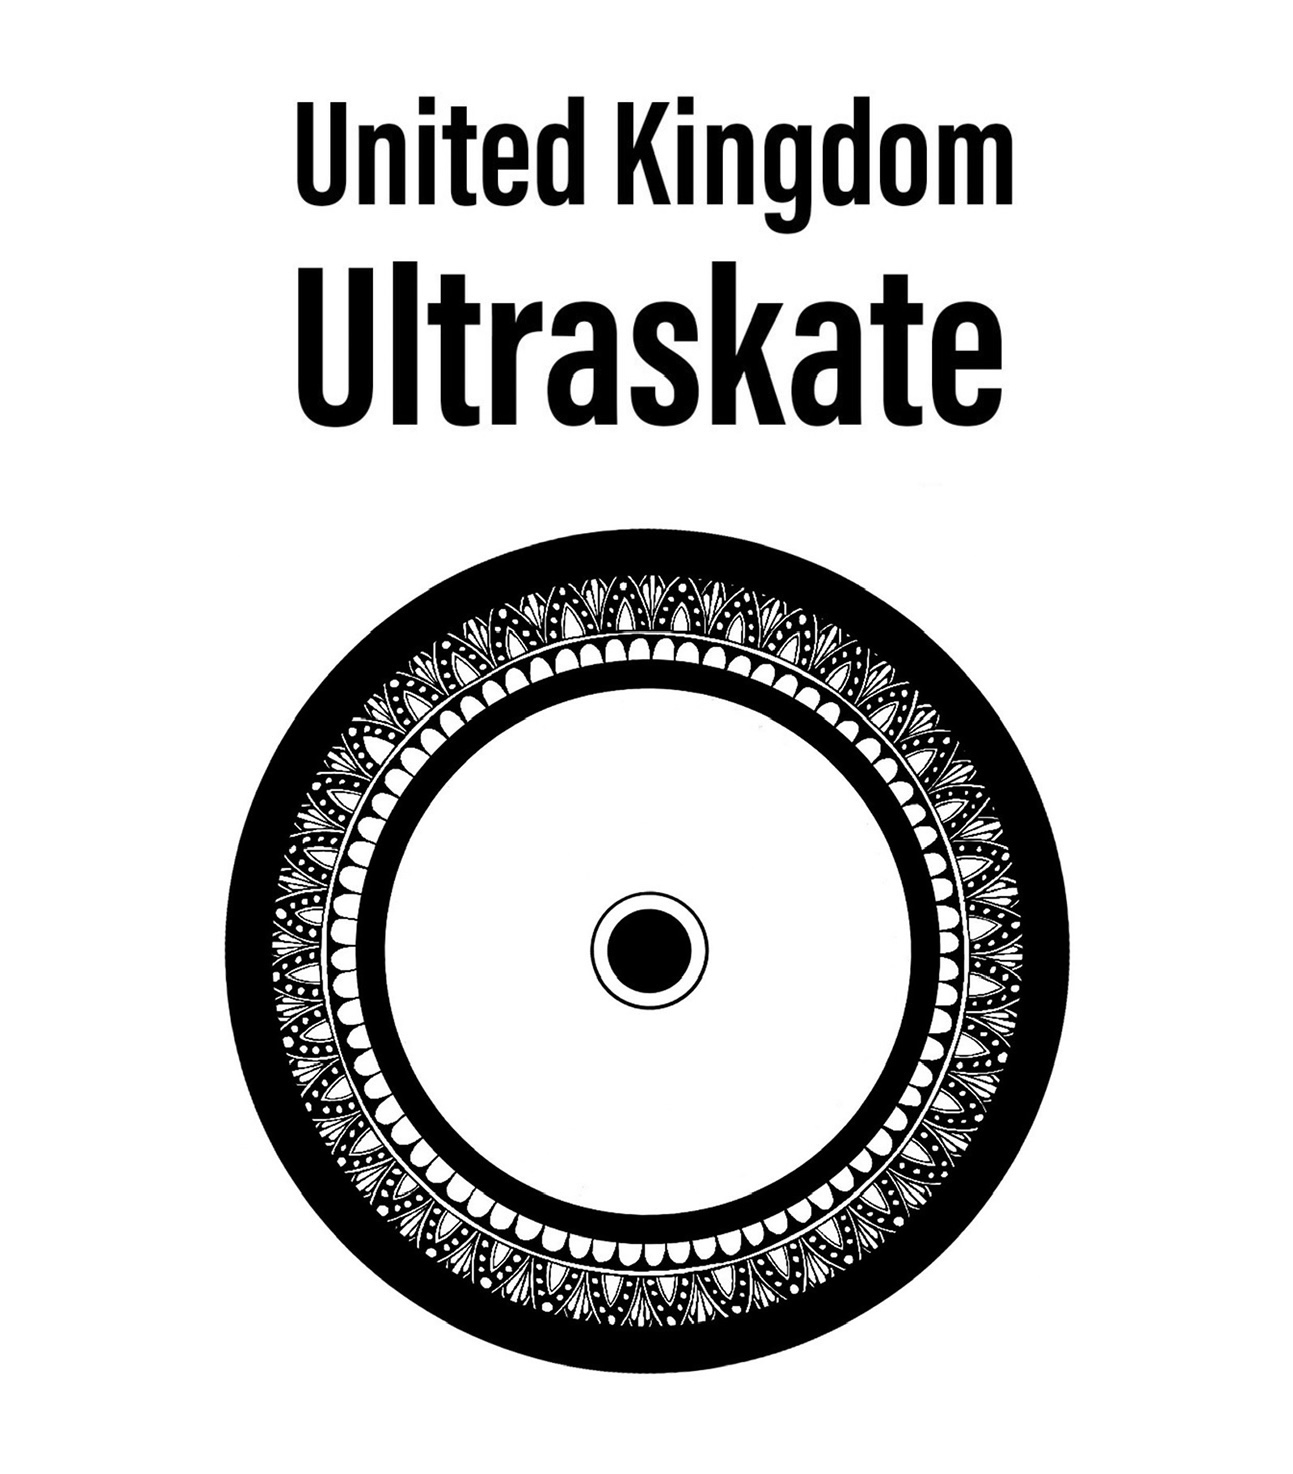 Ultraskate UK - Who's Ready?